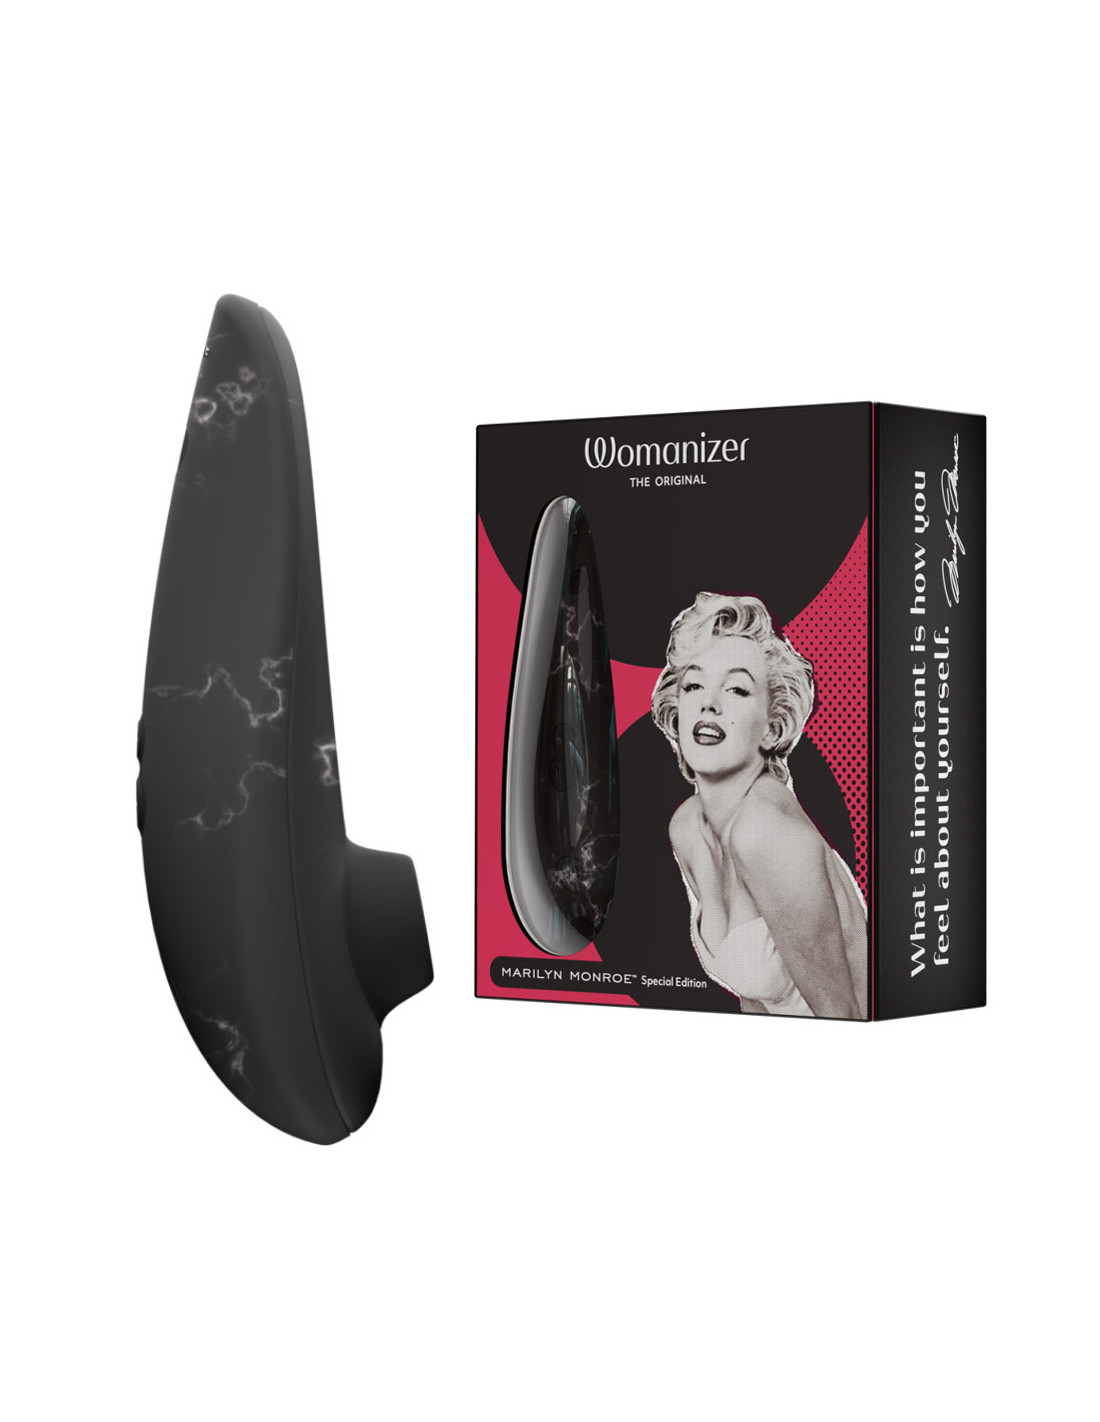 Womanizer Womanizer Marilyn Monroe Edition Speciale kewAyAQI